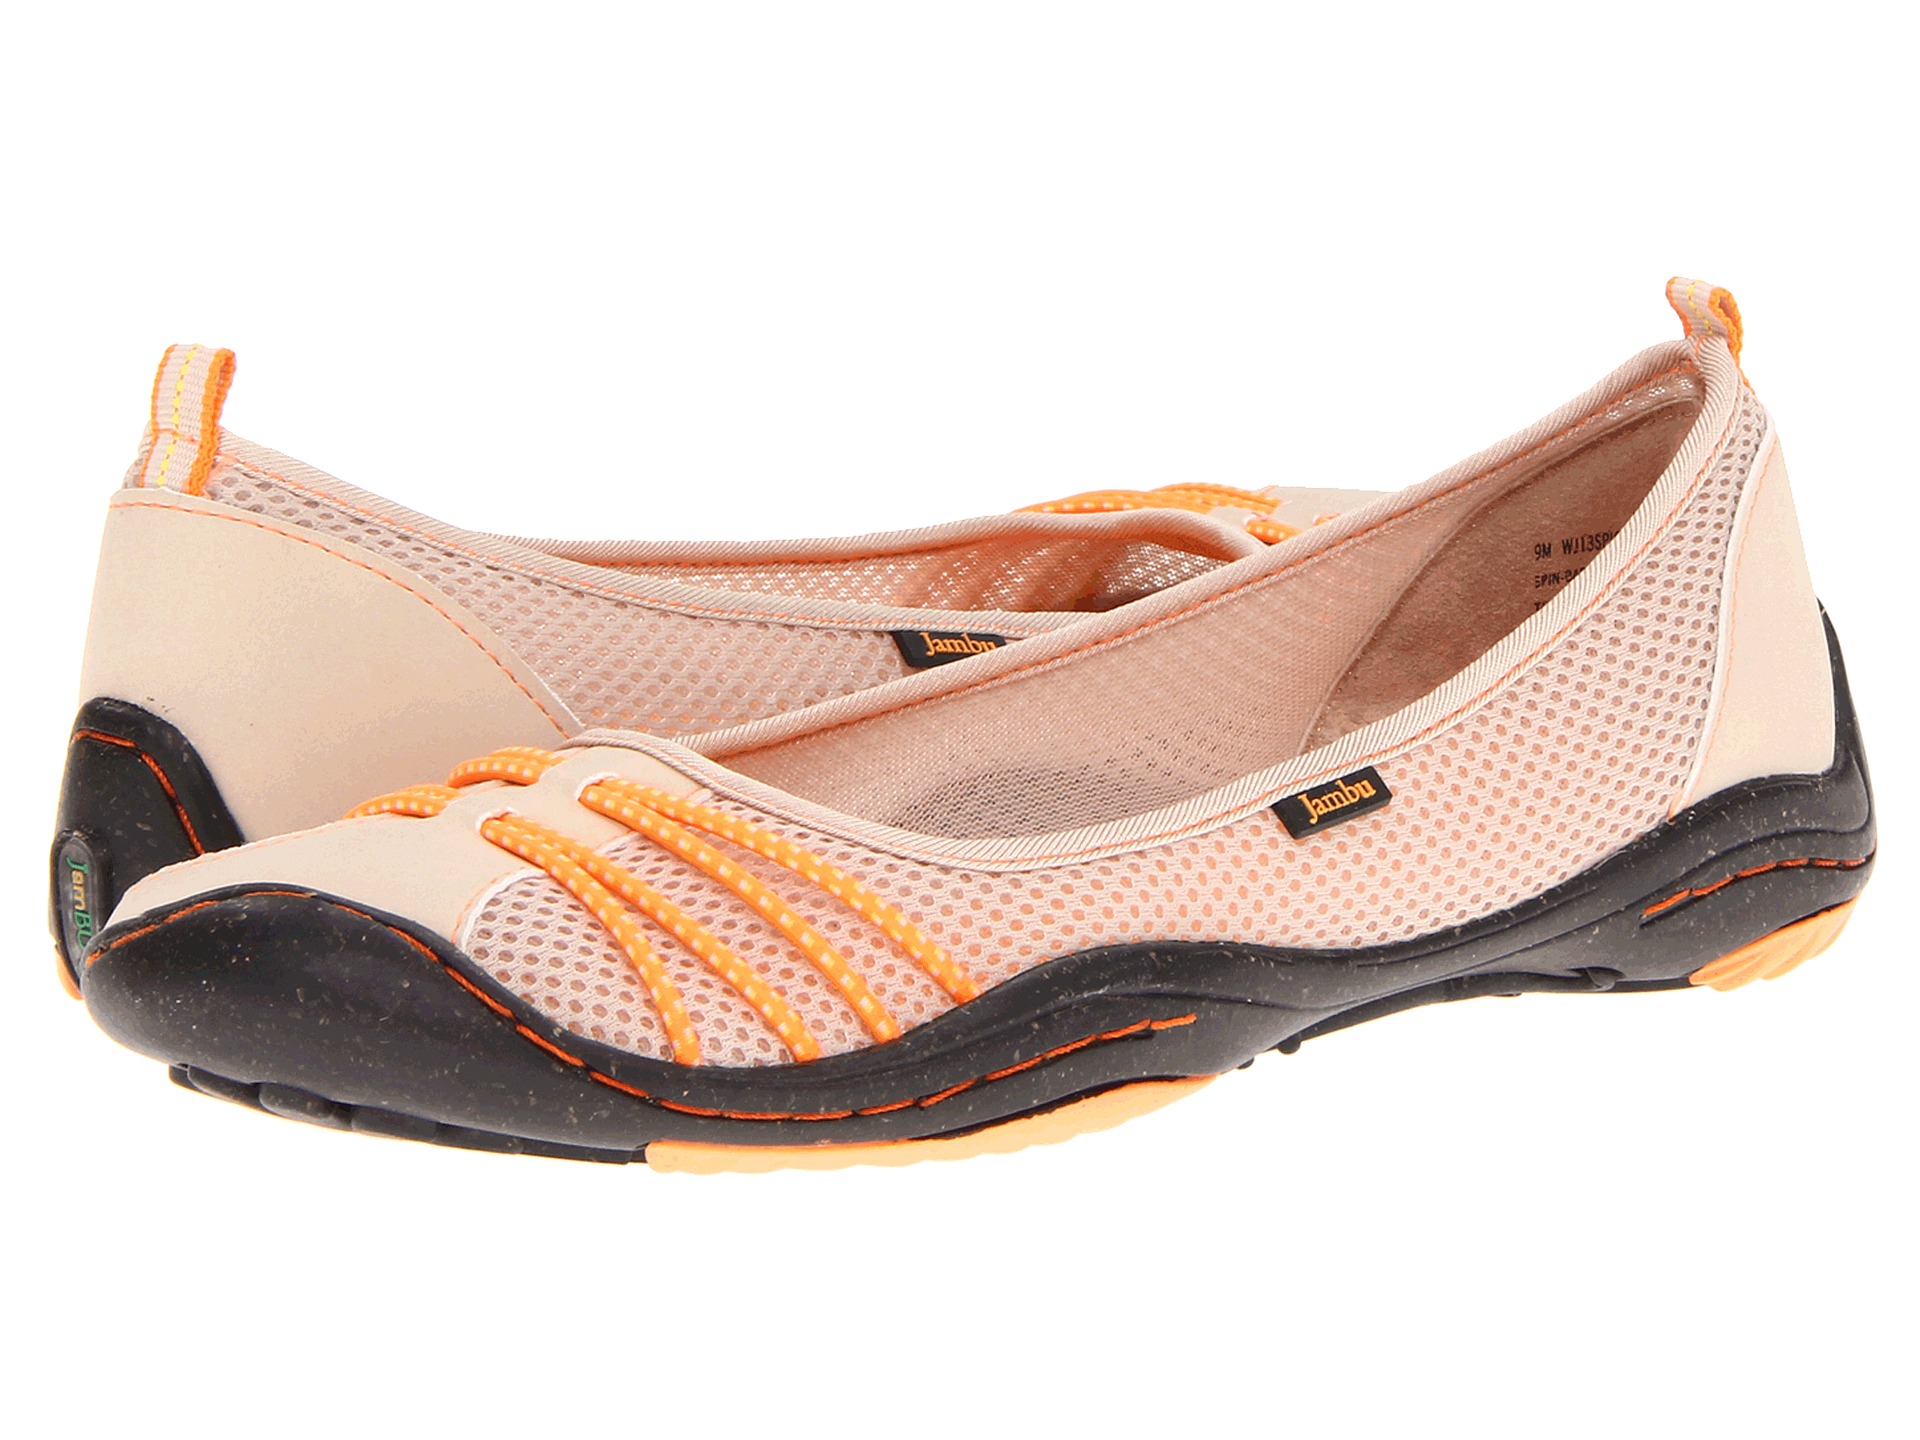 Jambu Spin Barefoot, Shoes, Women | Shipped Free at Zappos